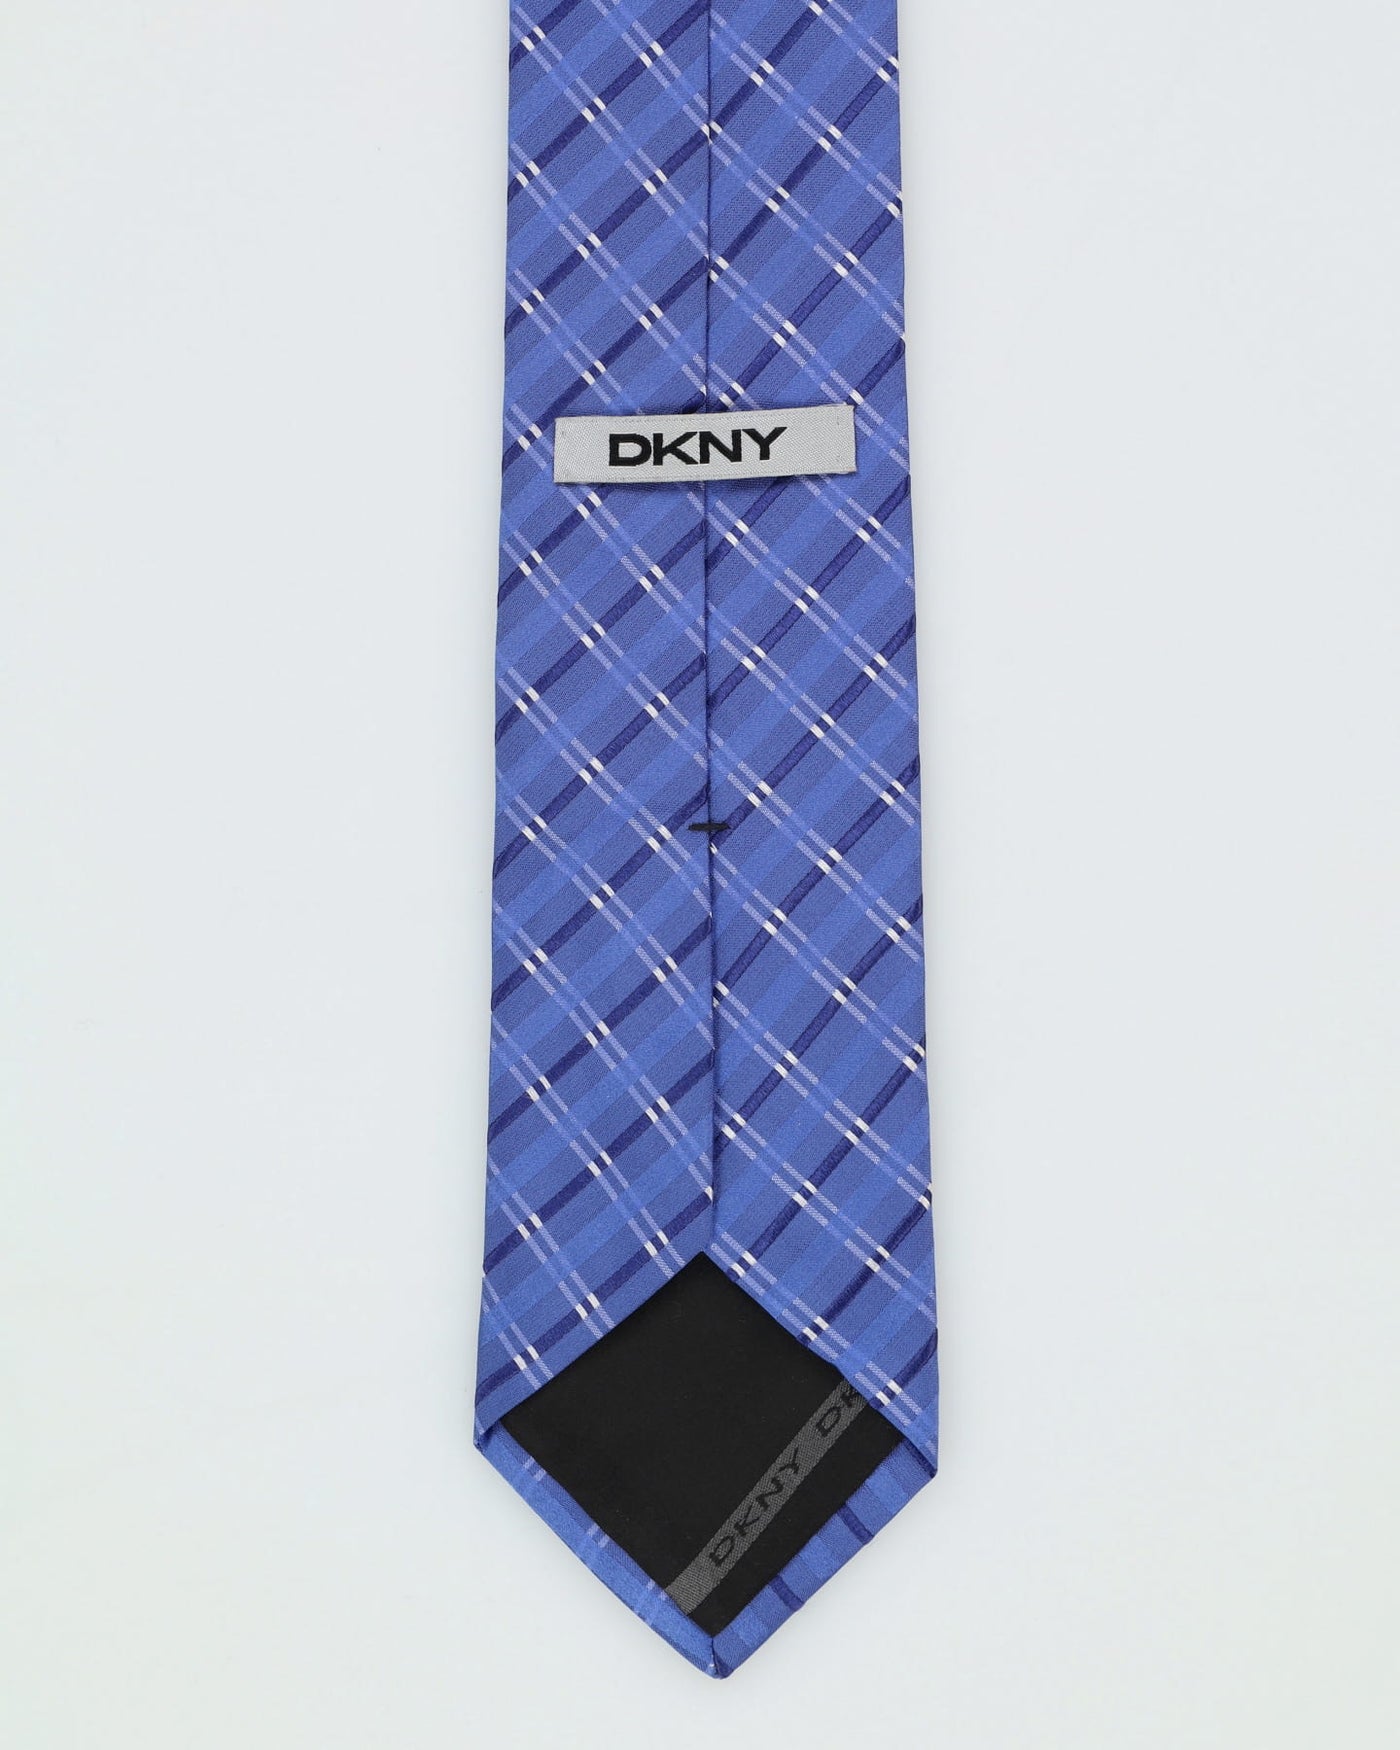 DKNY Blue Patterned Tie